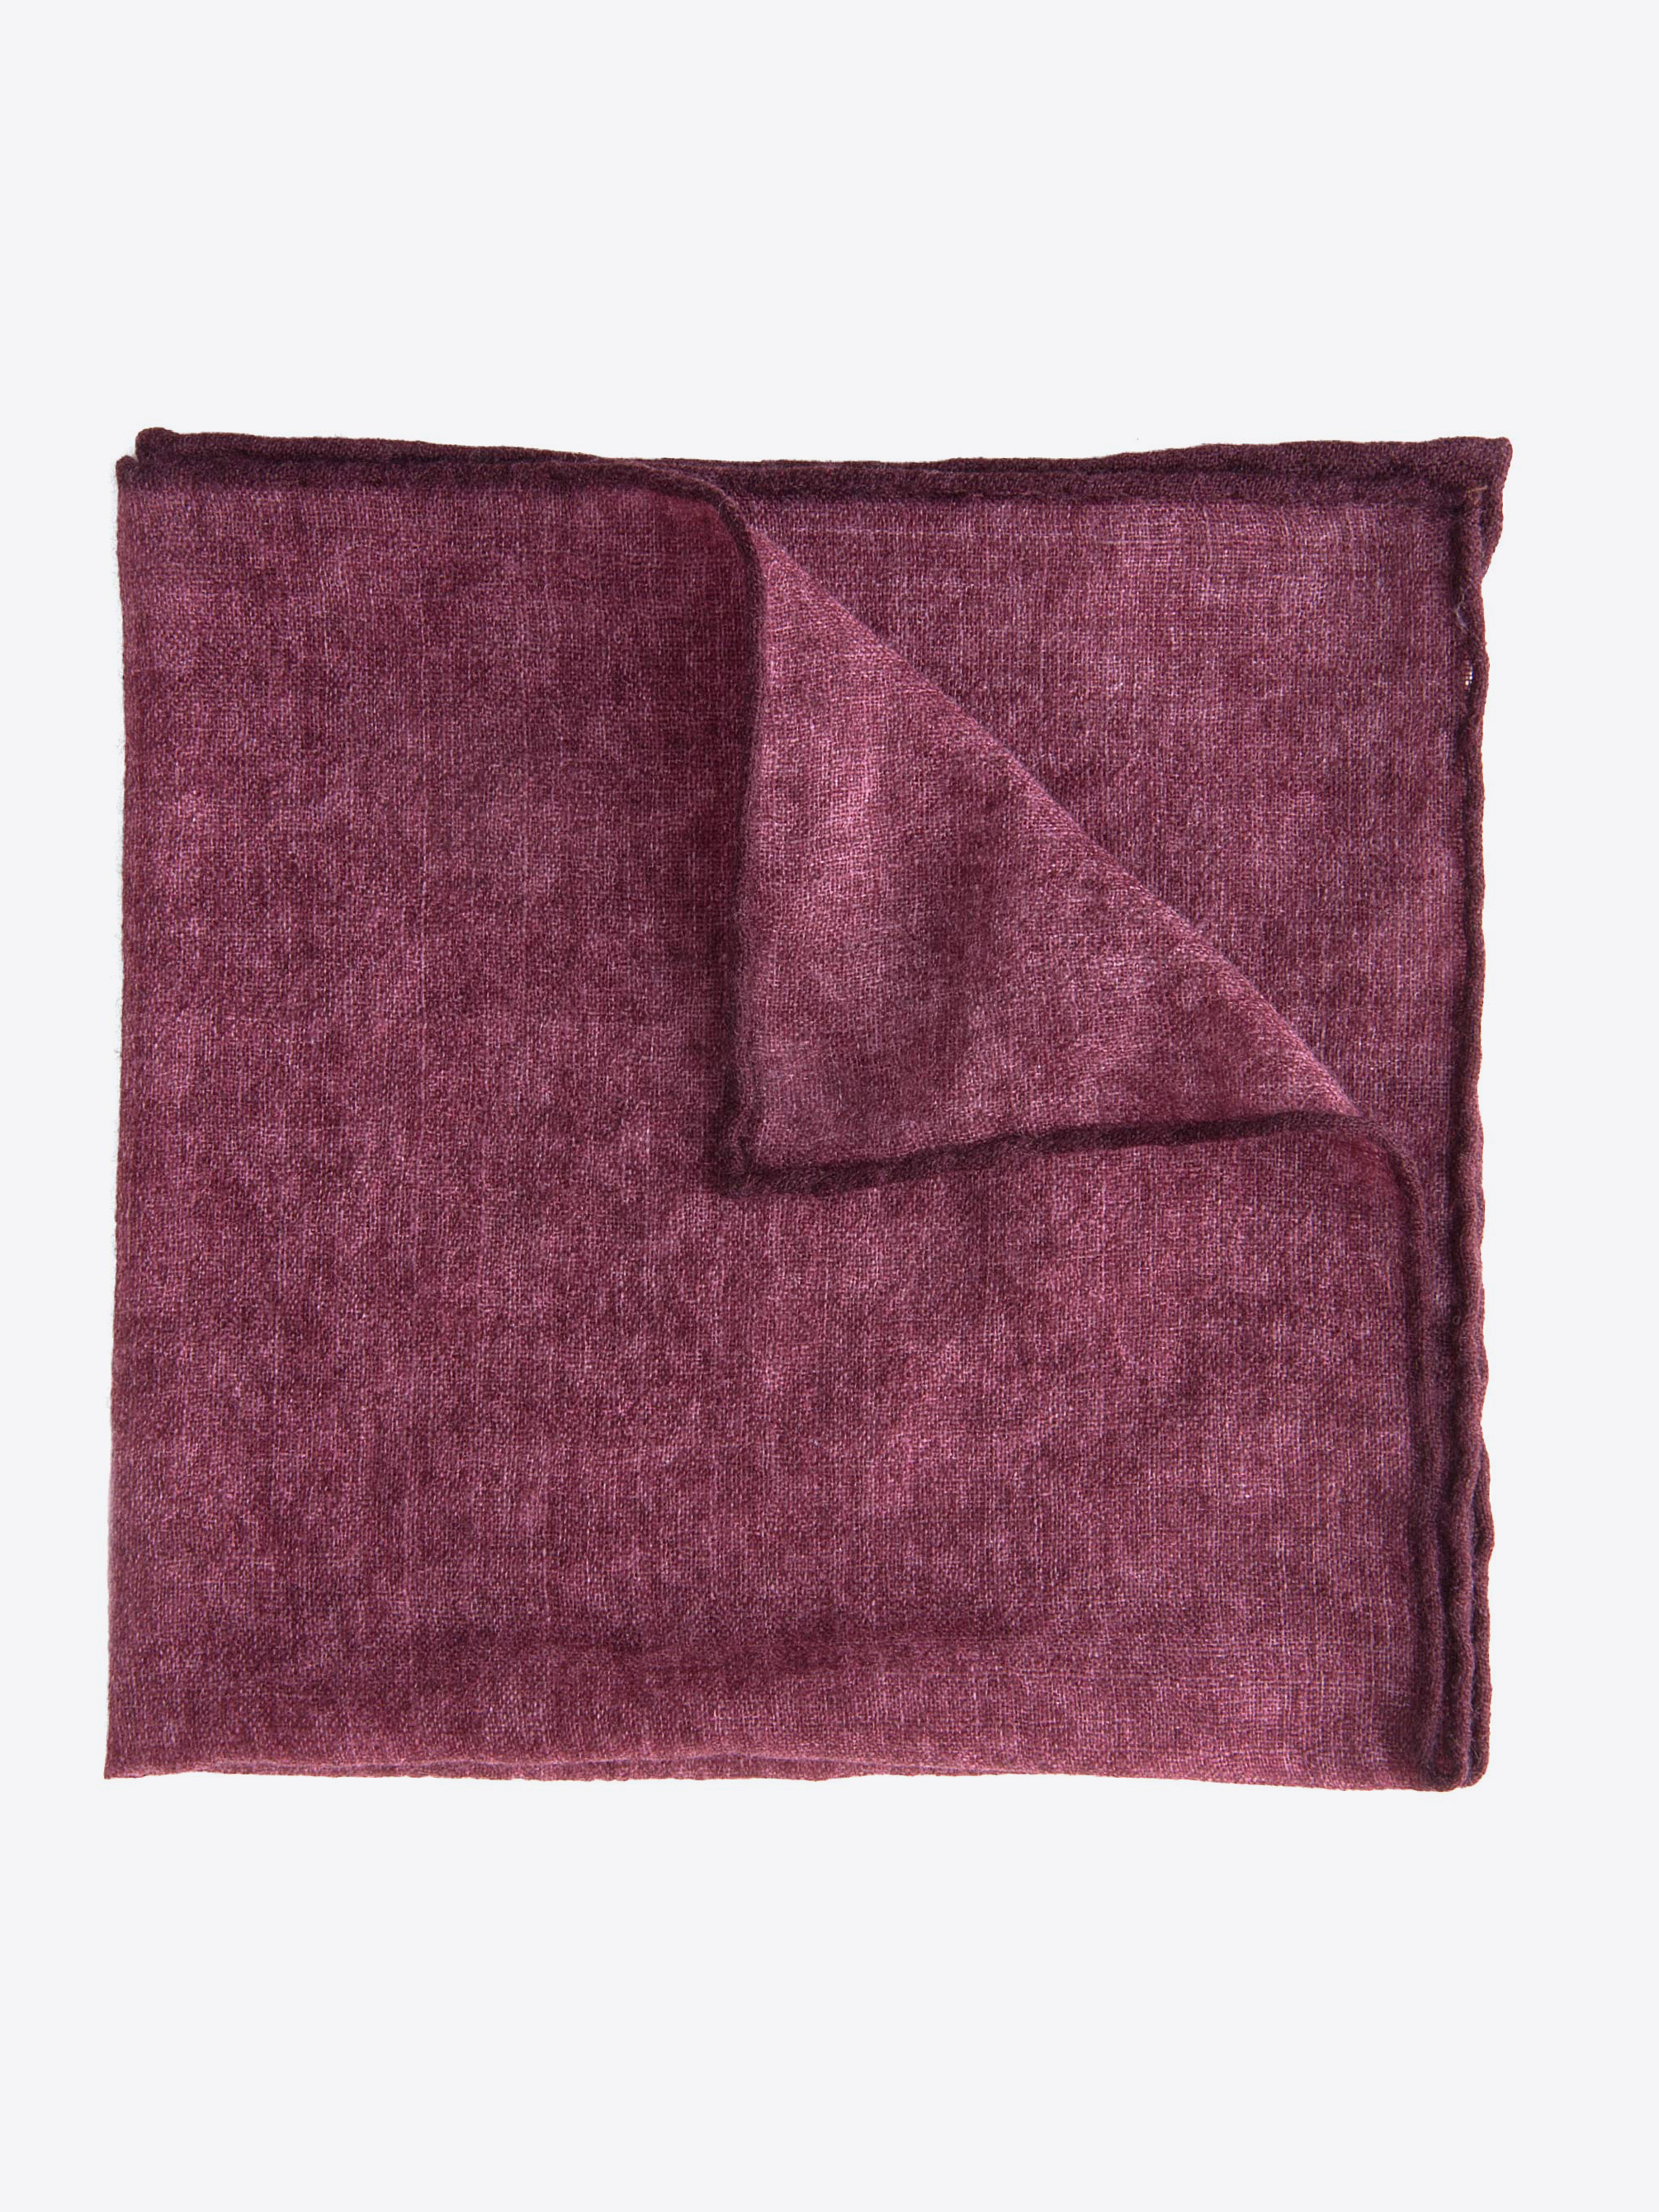 Zoom Image of Burgundy Wool Pocket Square